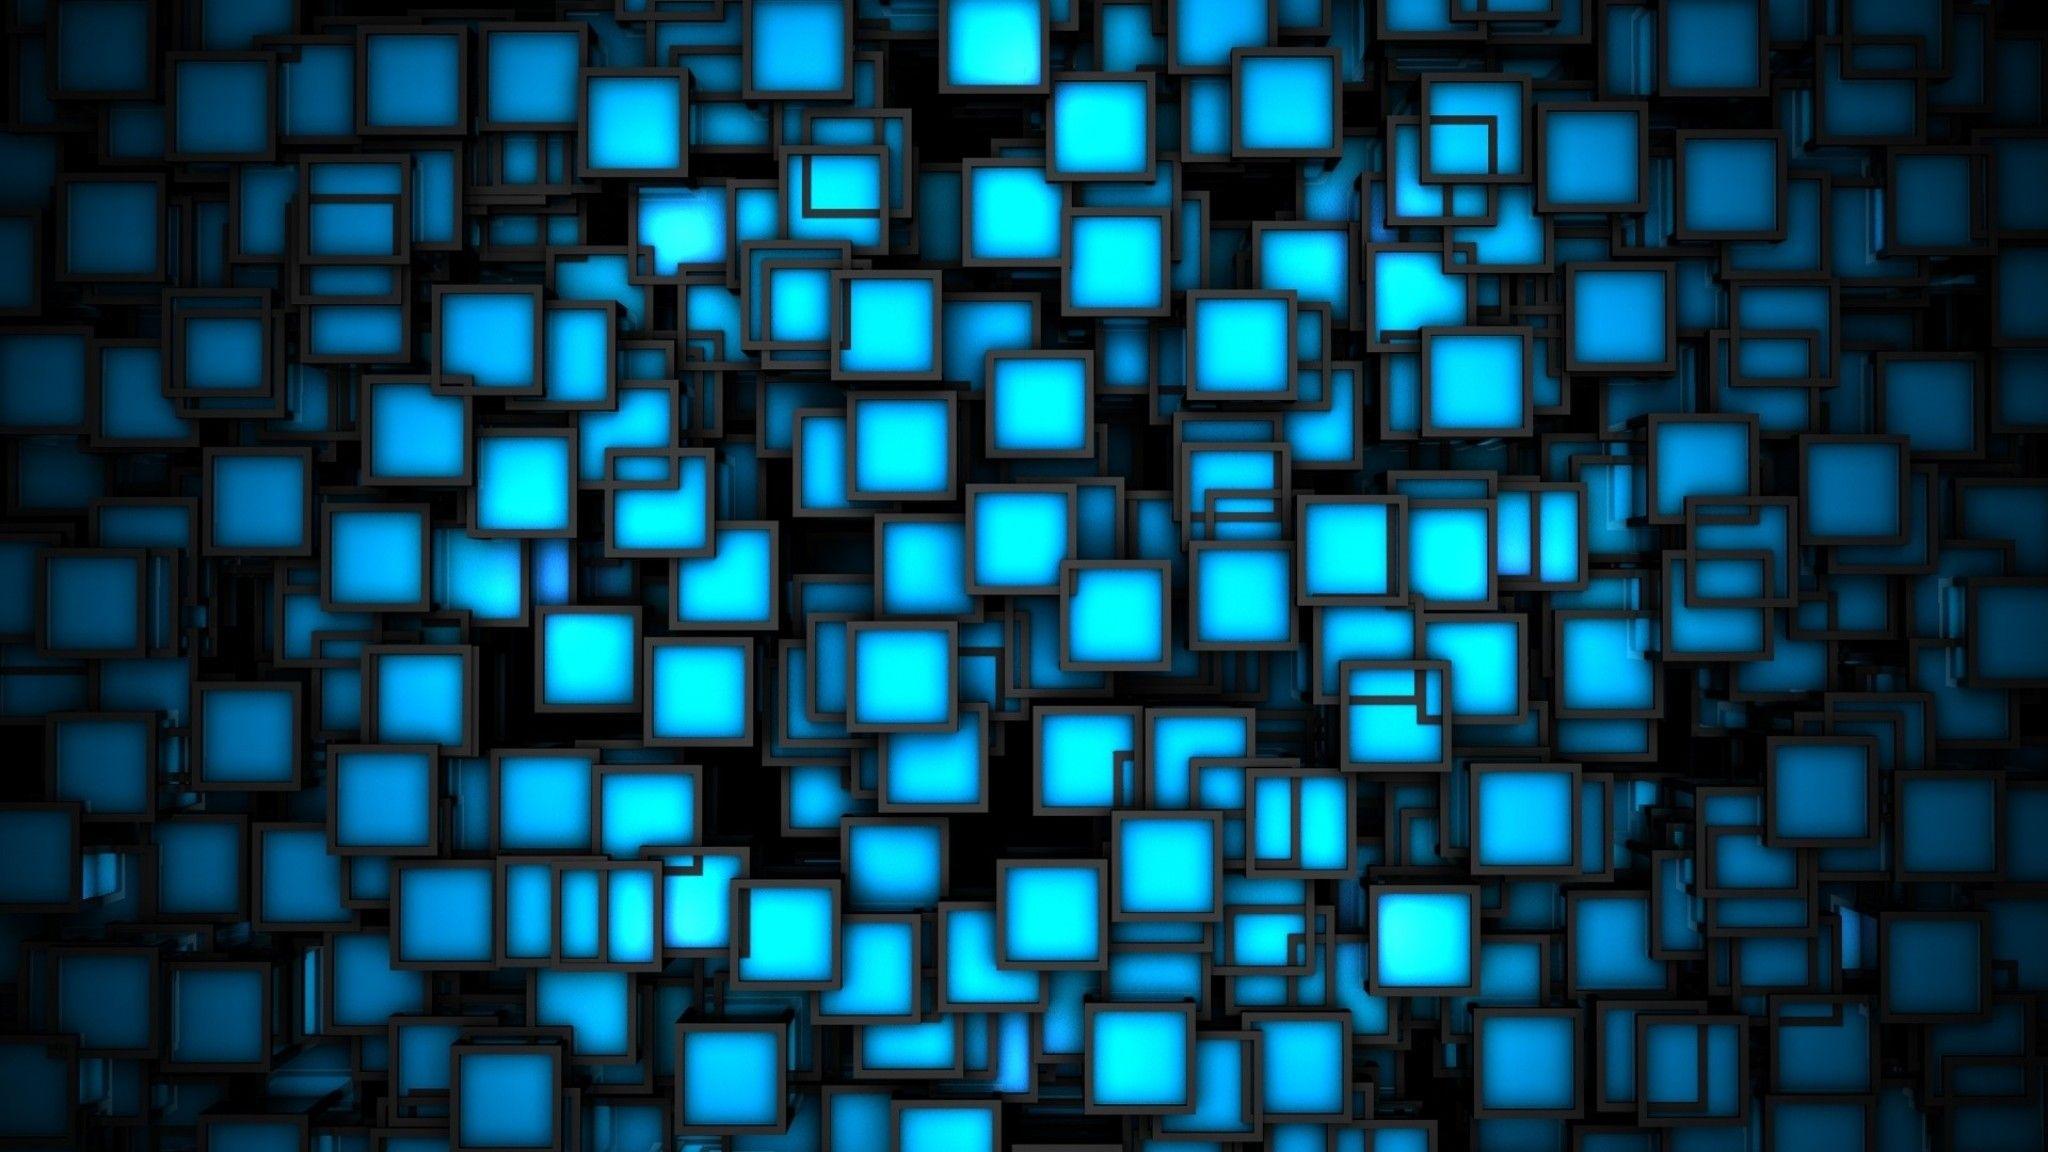 Free 4K Wallpaper - "Blue Neon"